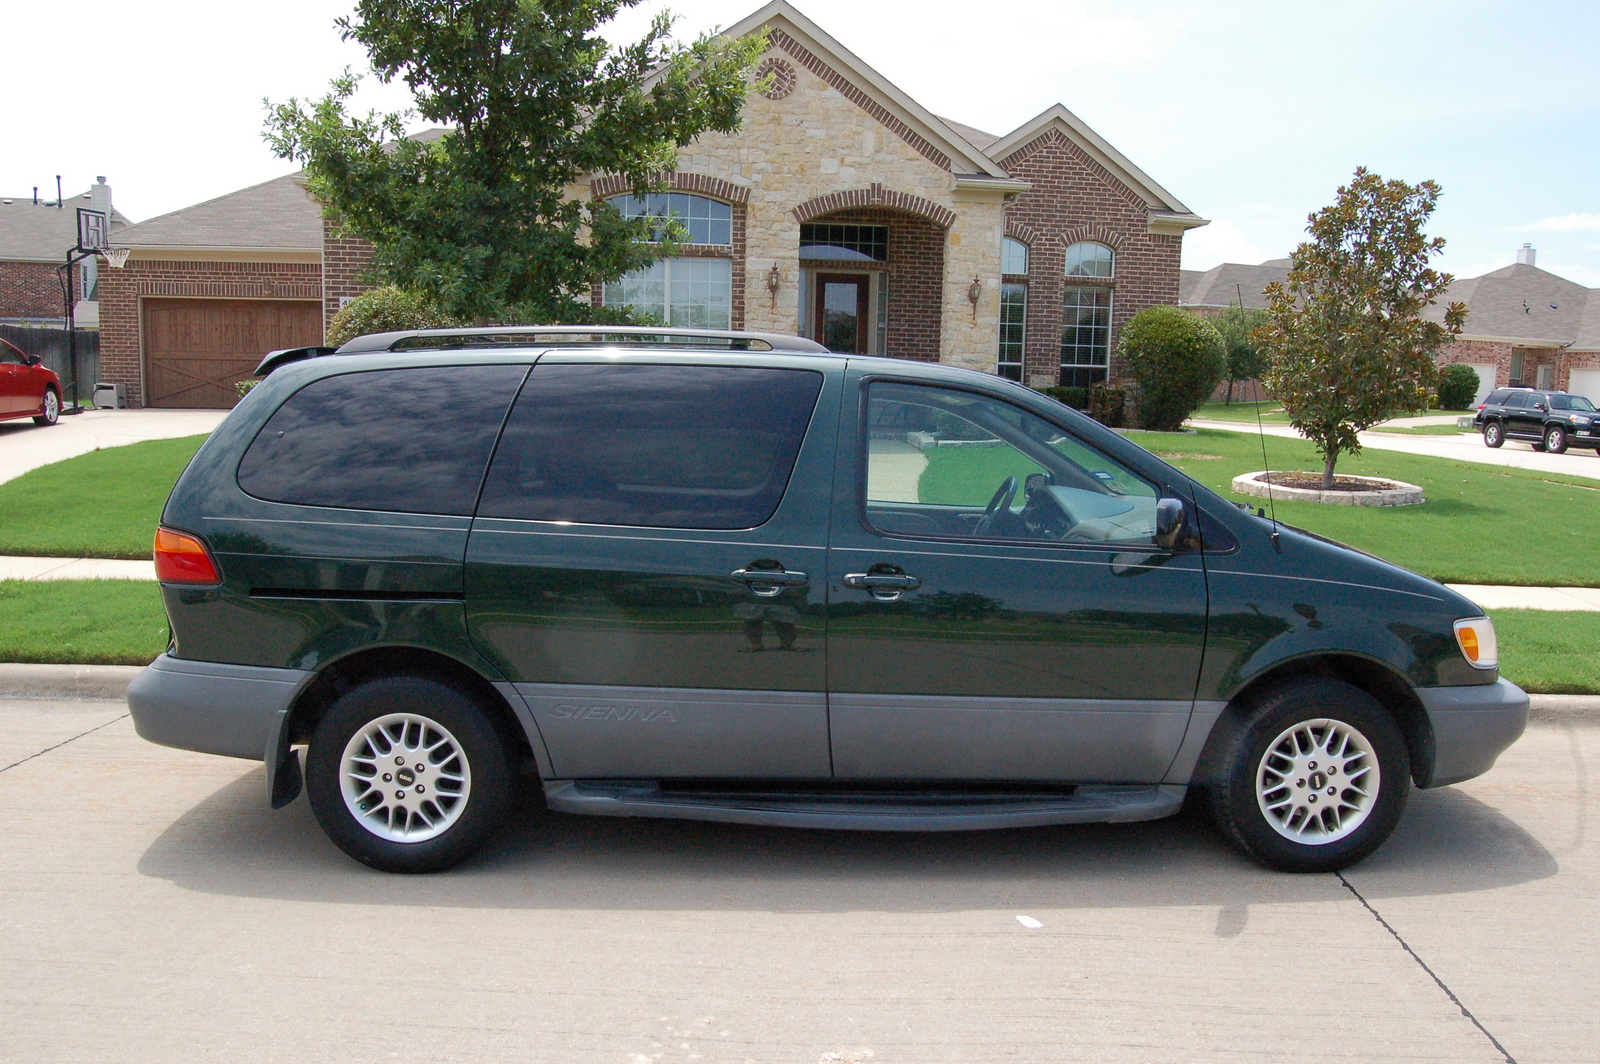 2000 toyota sienna minivan review #1